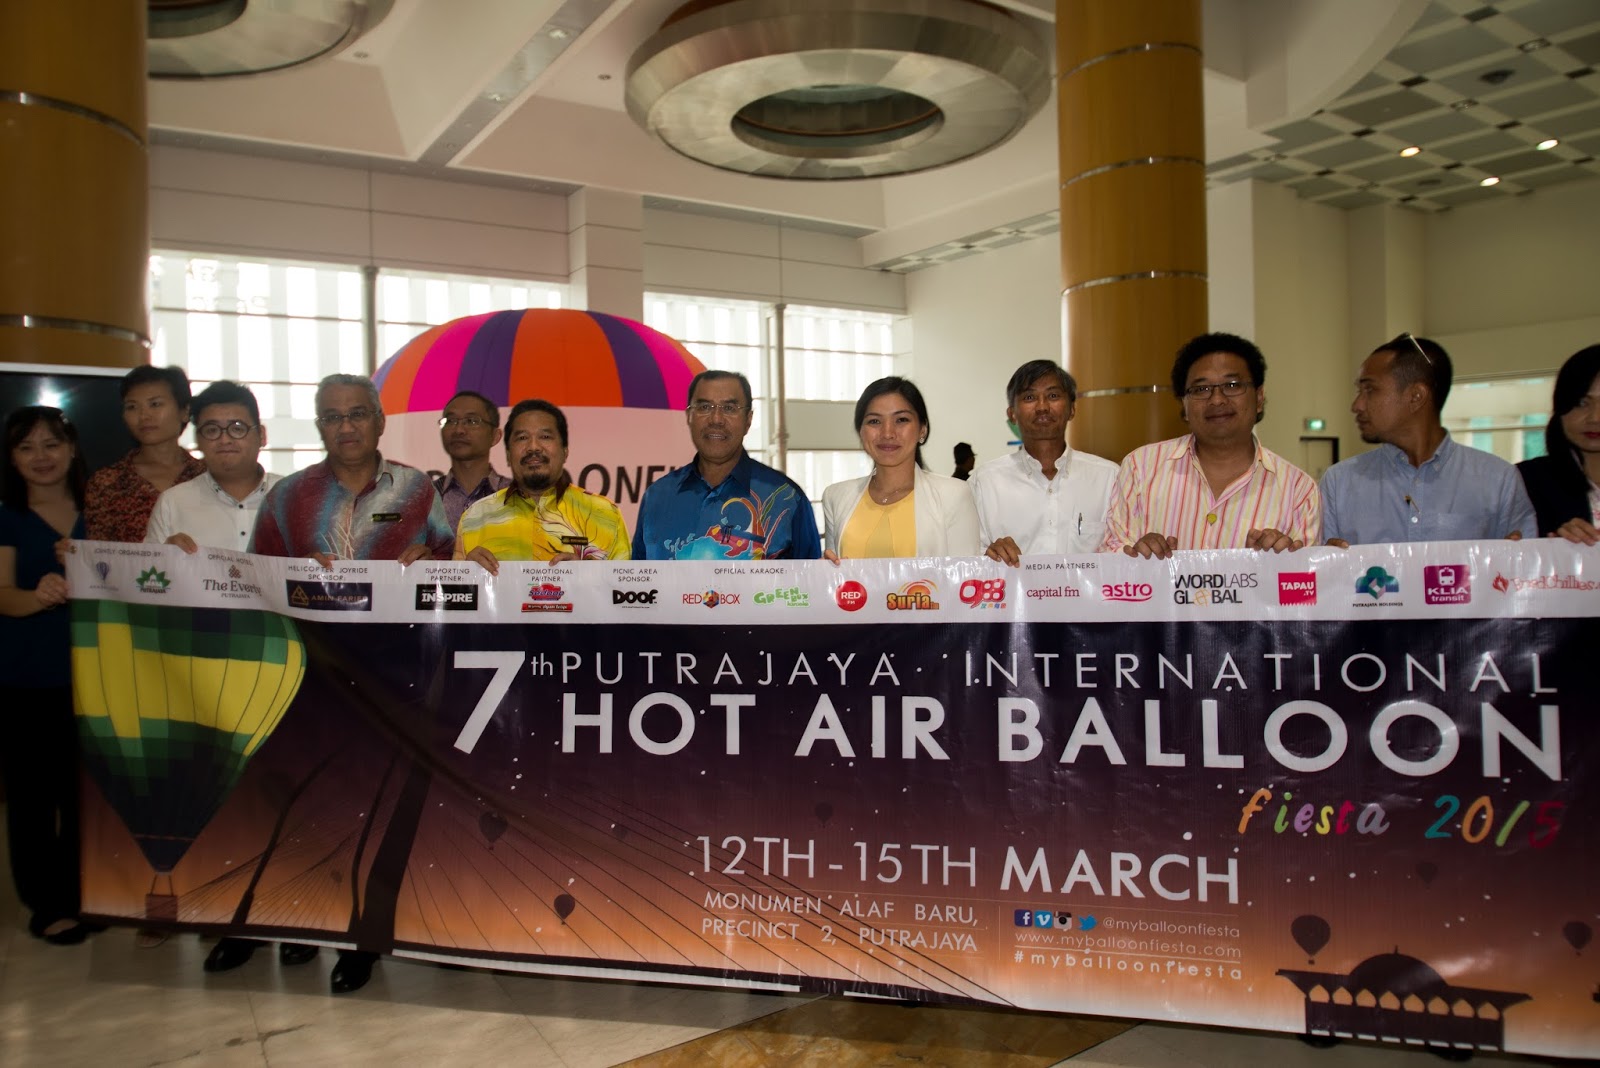 Group photo of 7th Putrajaya International Hot Air Balloon Fiesta 2015 organisers, sponsors and partners